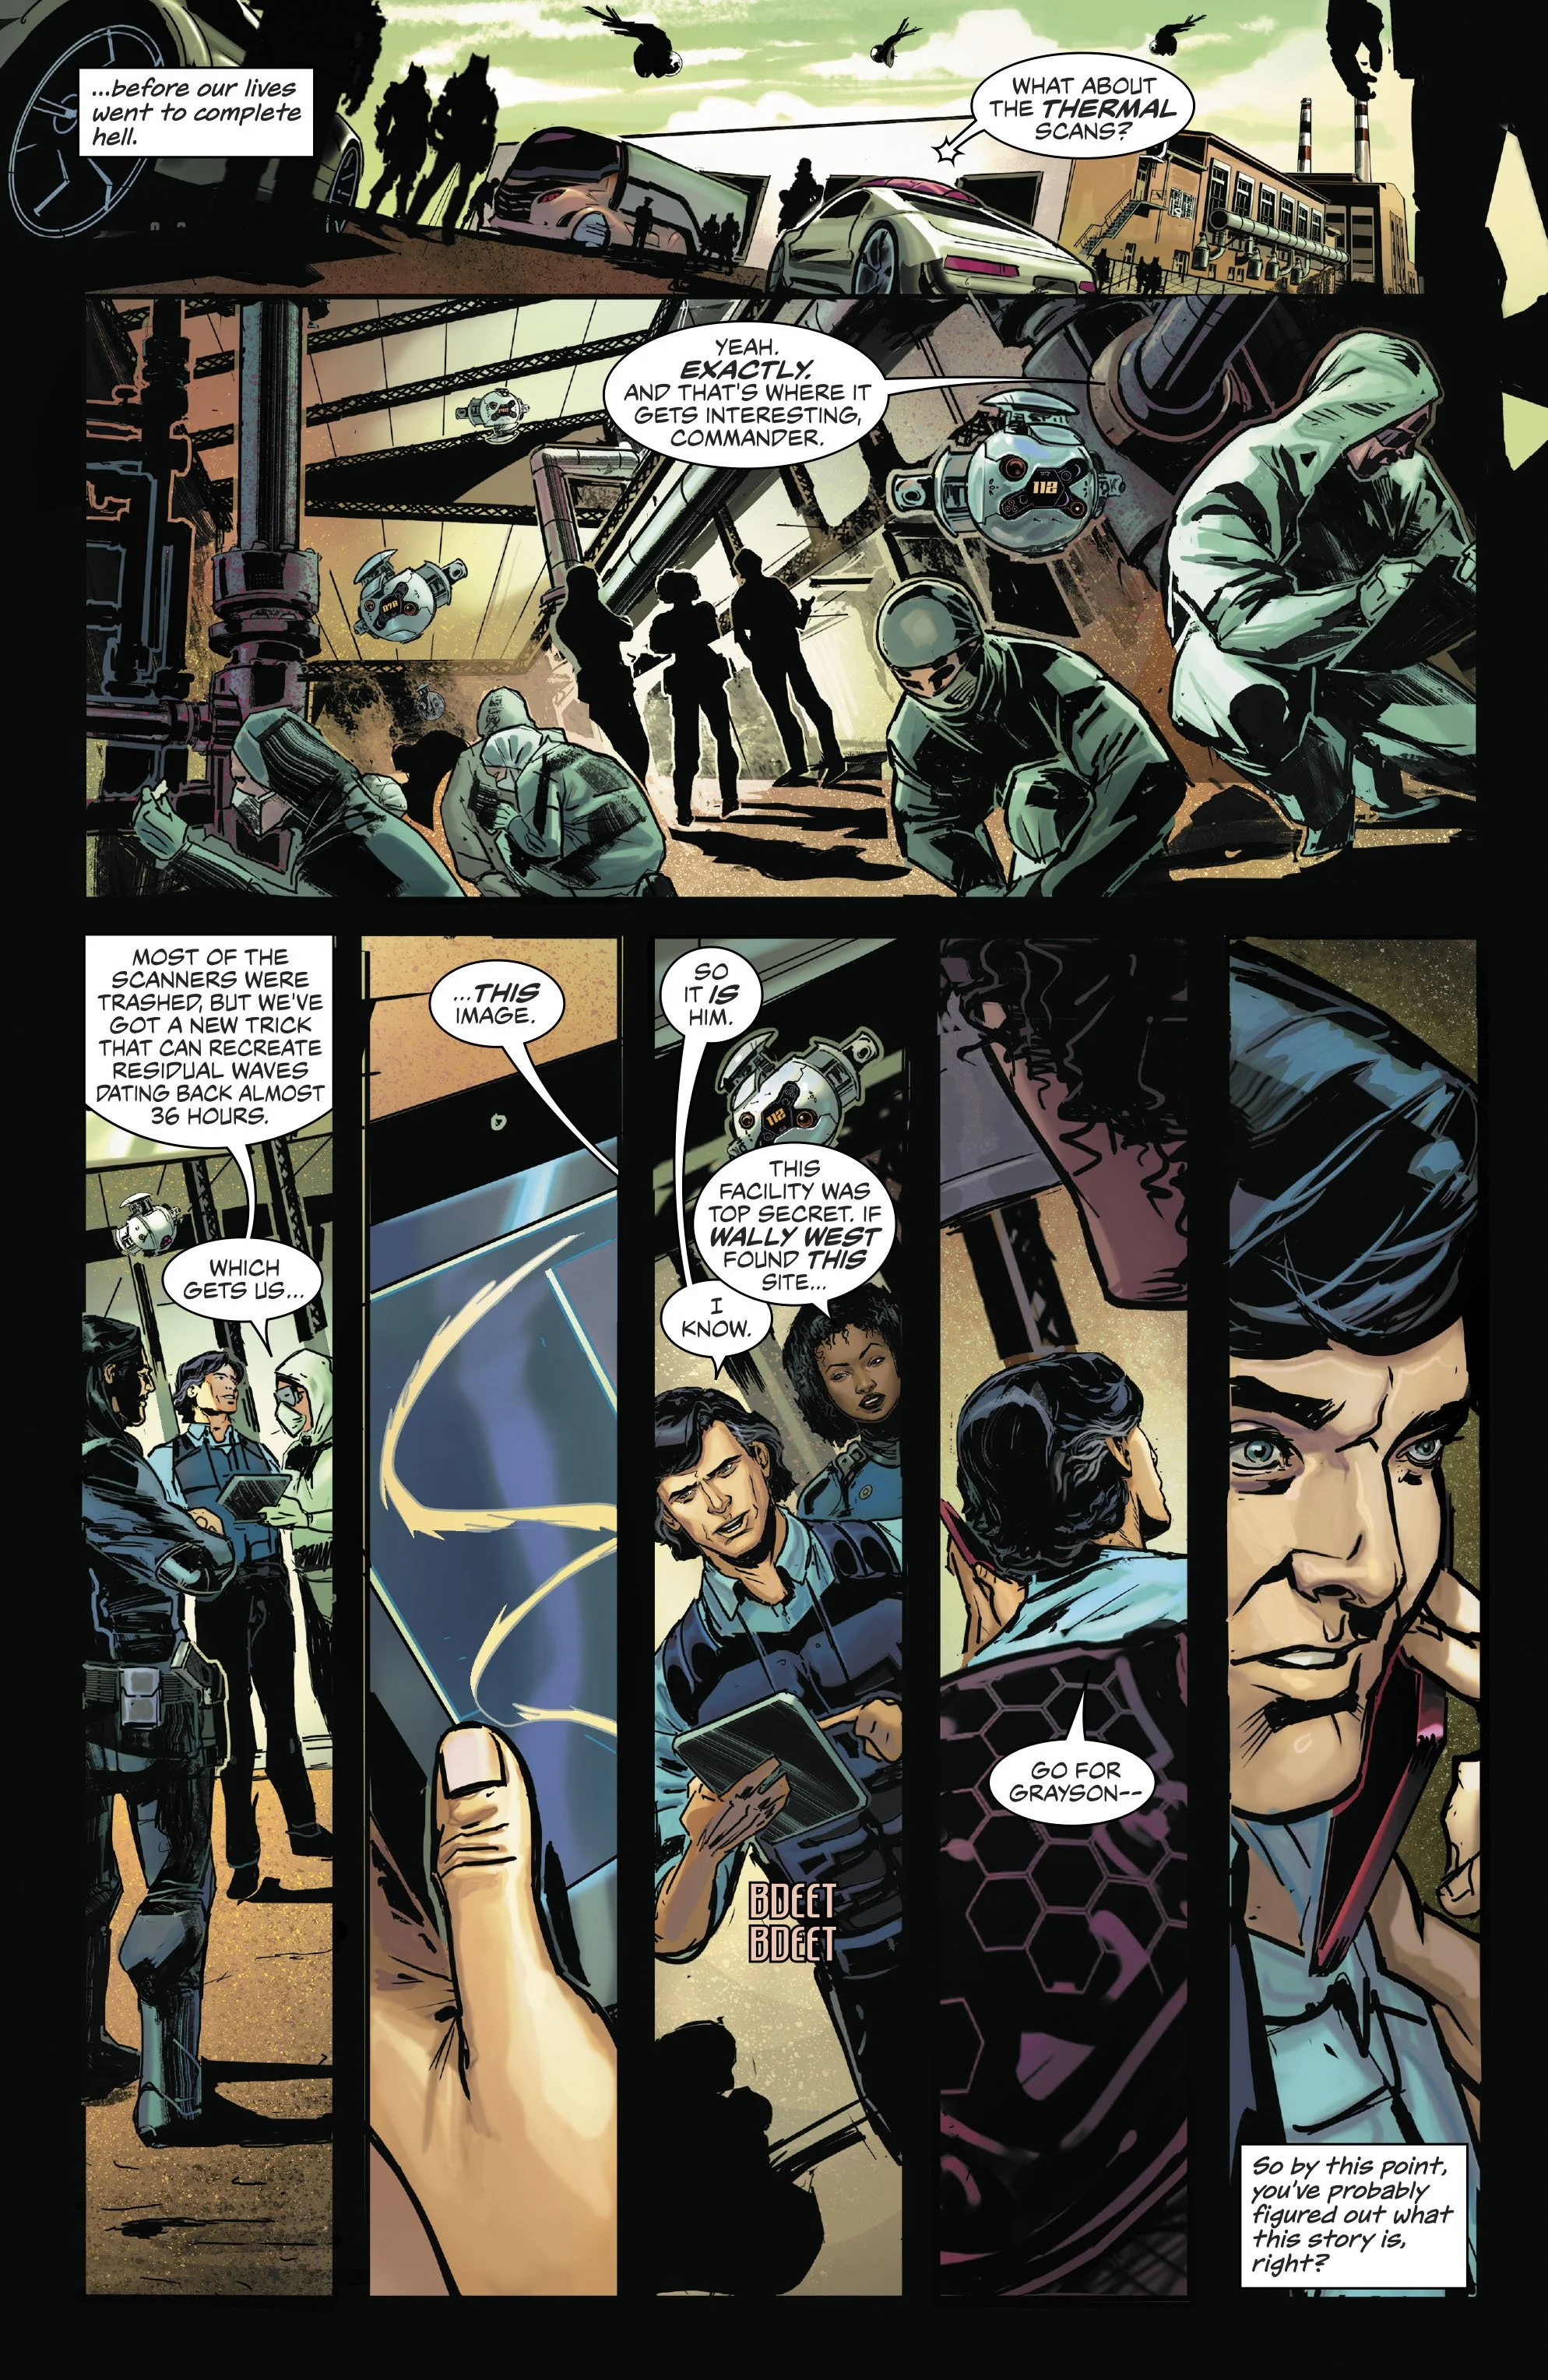 В мире комикса Nightwing: The New Order суперспособности вне закона - фото 5